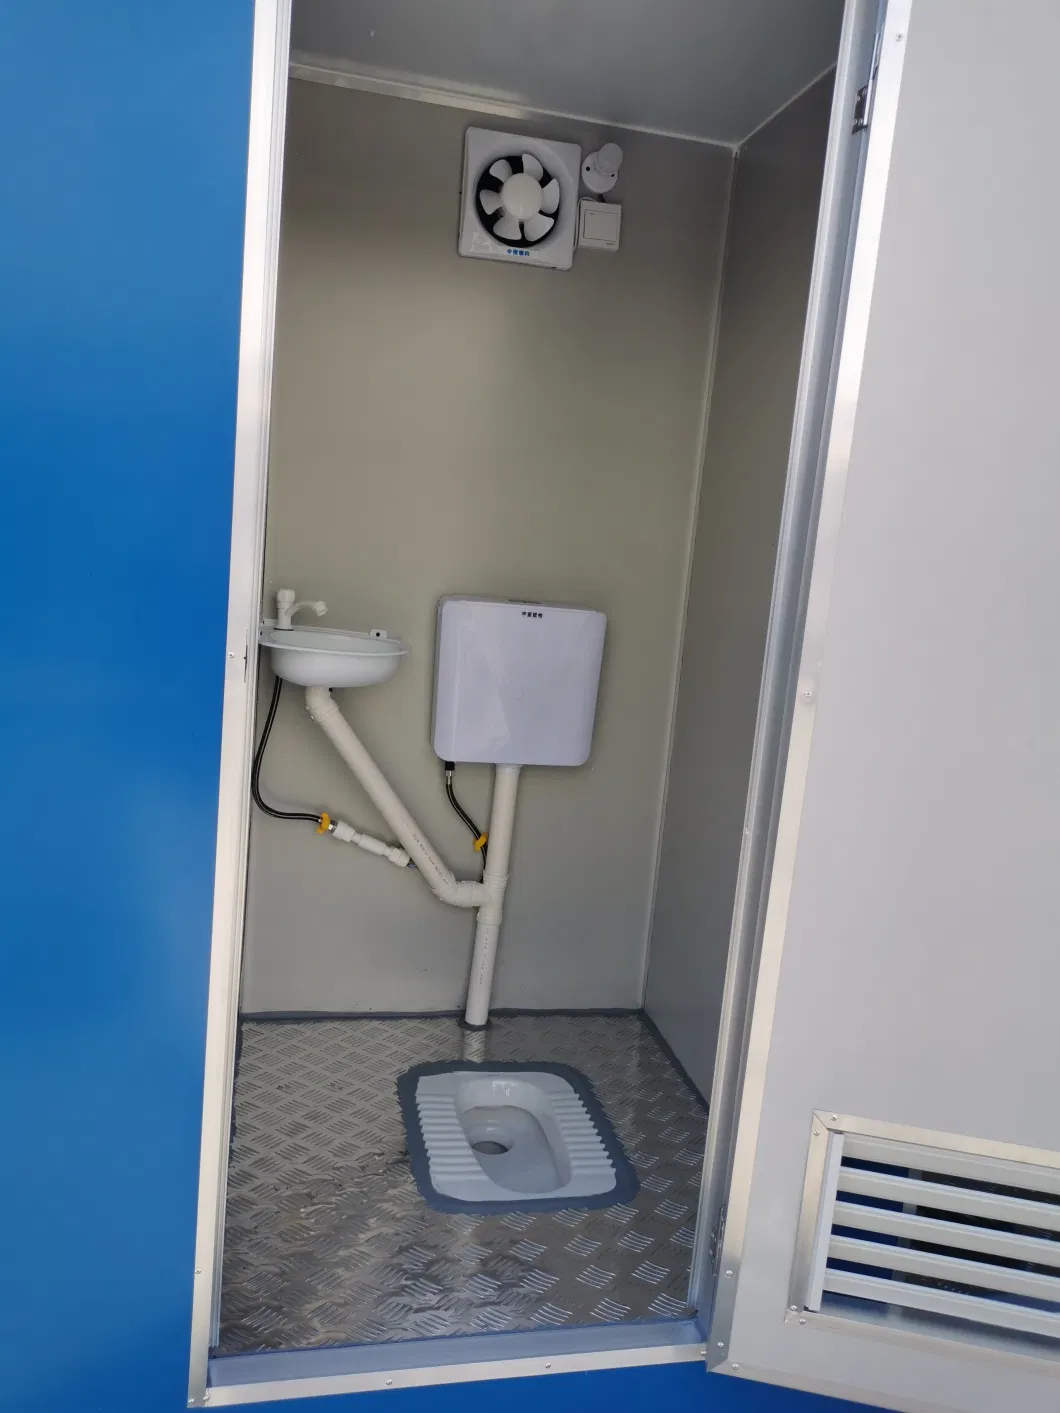 Portable Toilets Mobile Shower Room Prefabricated Mobile Toilet